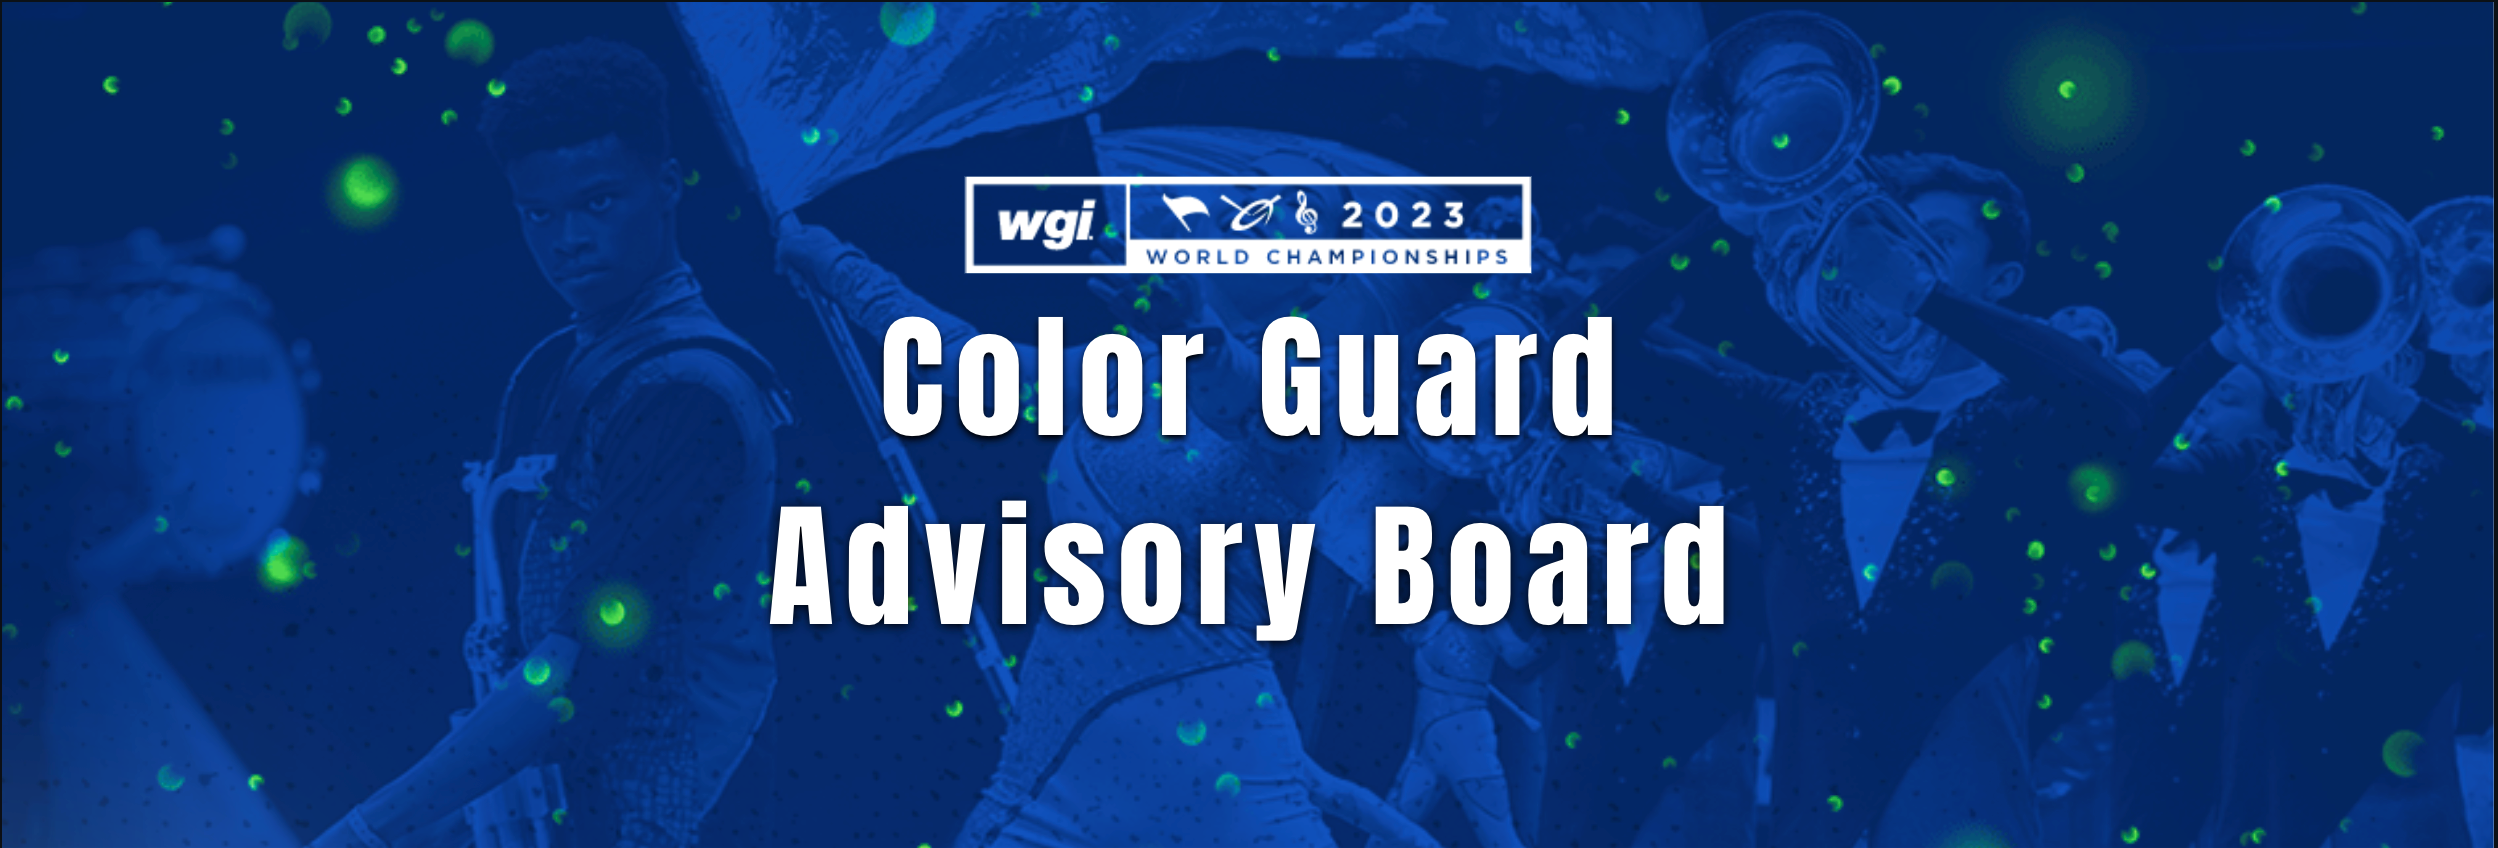 2023 Color Guard Advisory Board Meeting Details WGI